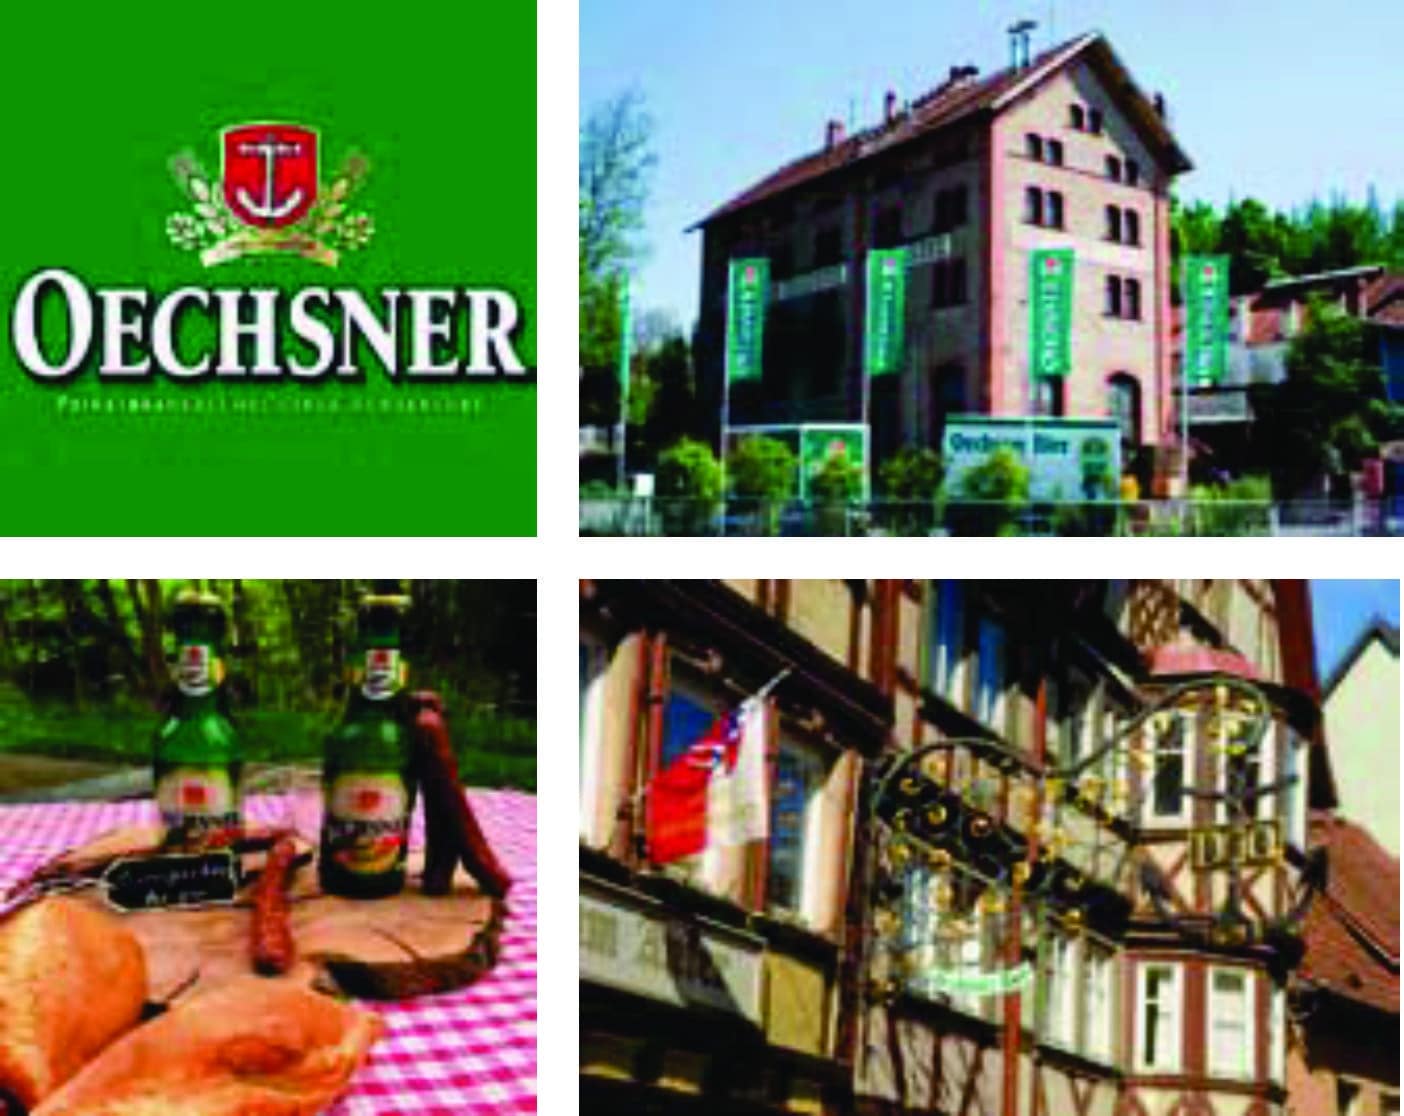 Brauerei Oechsner in Ochsenfurt.